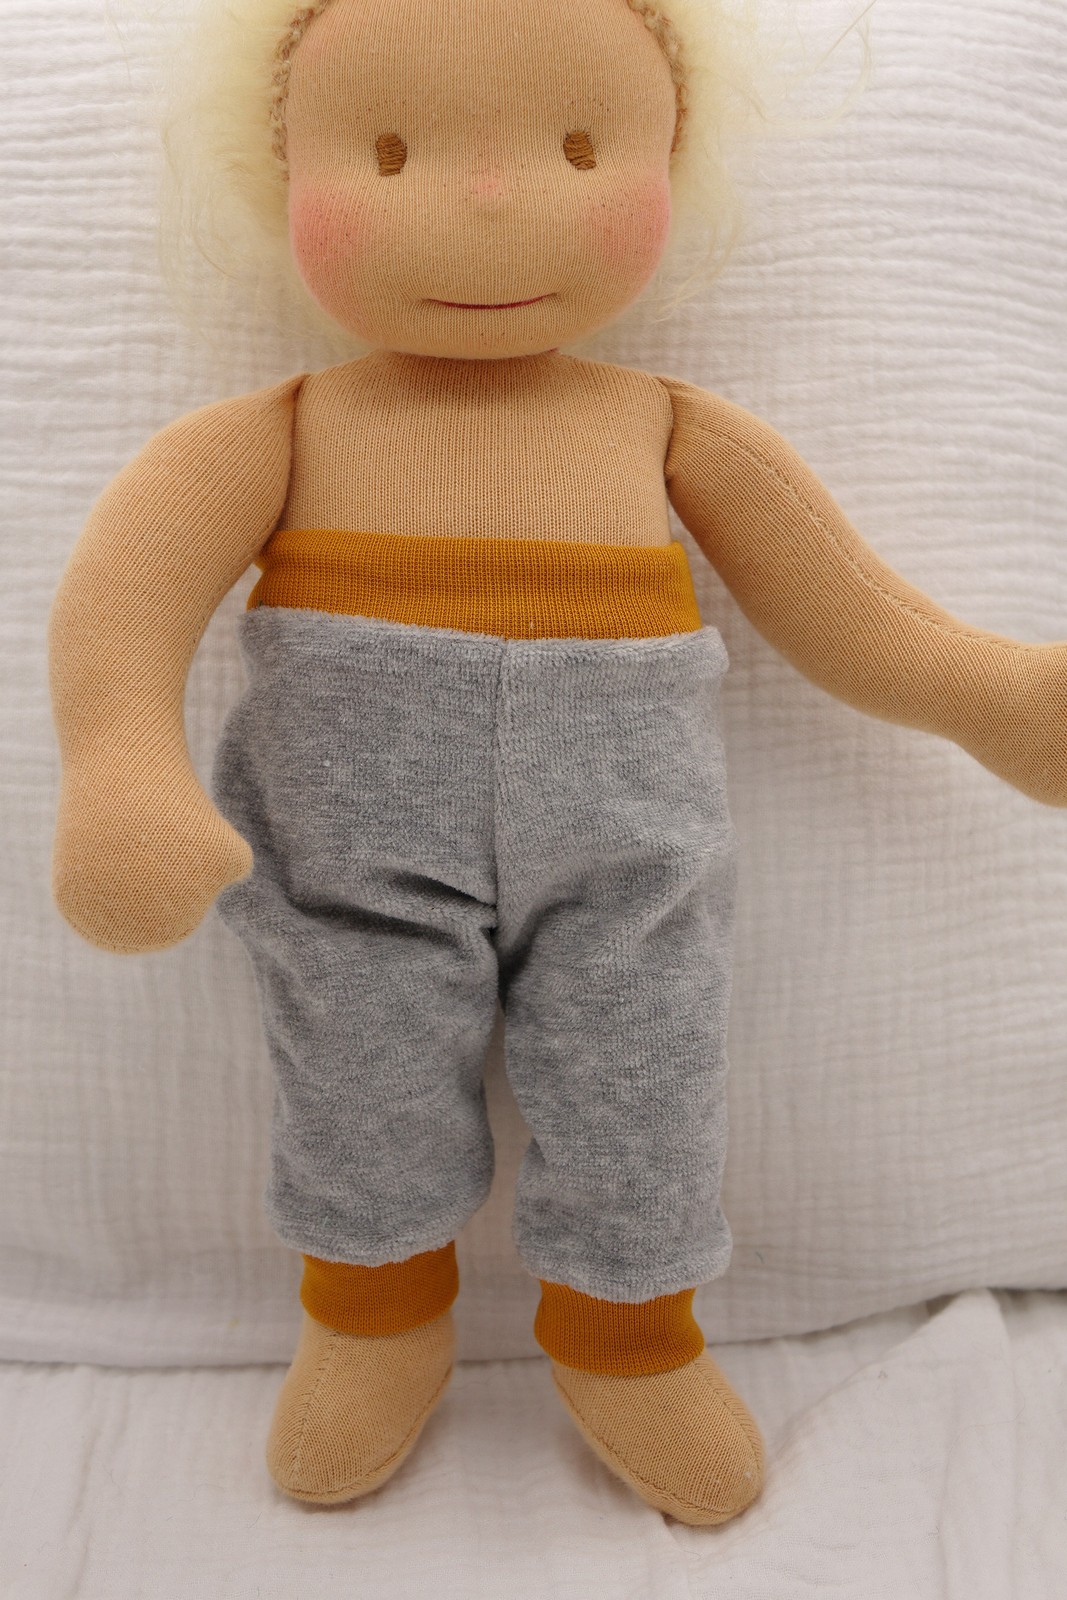 Puppen Leggings Leggins Hose Kleidung für 40 cm Puppen Nr 8193 